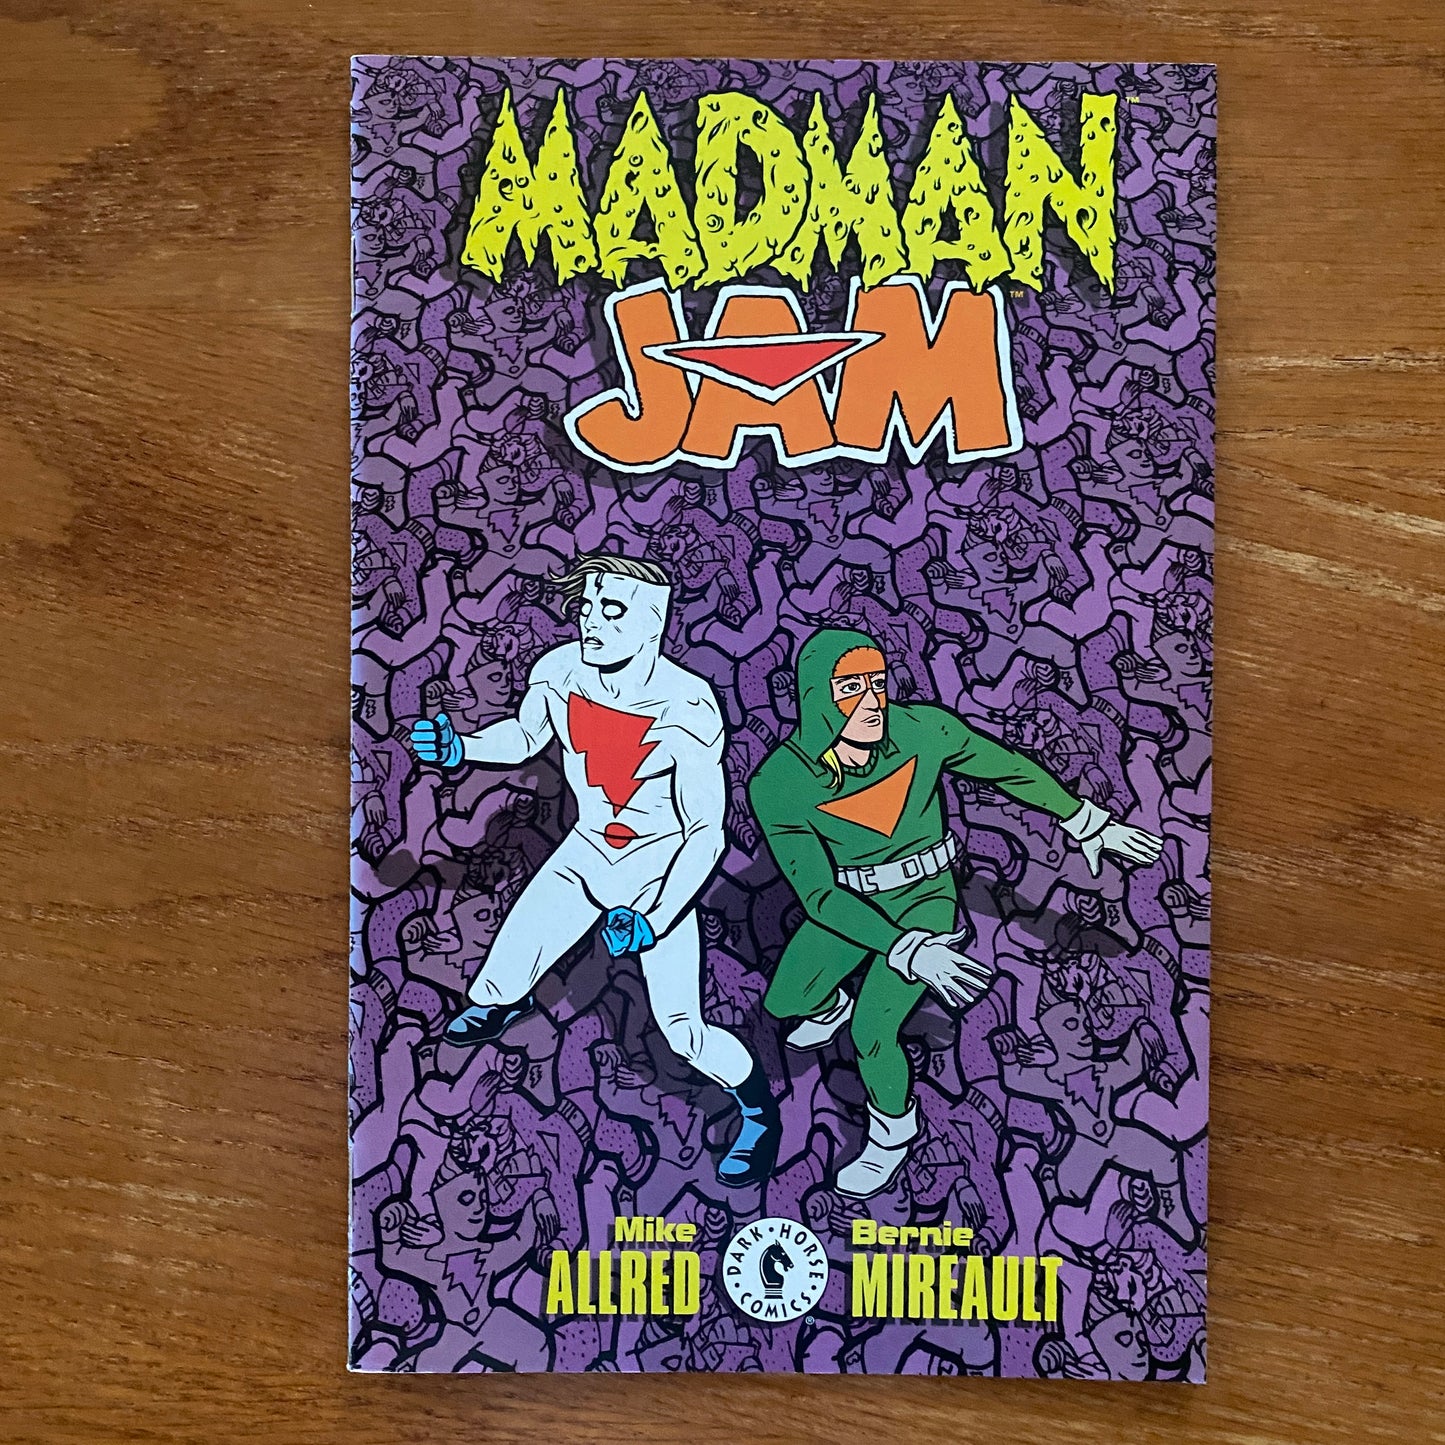 Madman Jam 1 - Mike Allread & Bernie Mireault